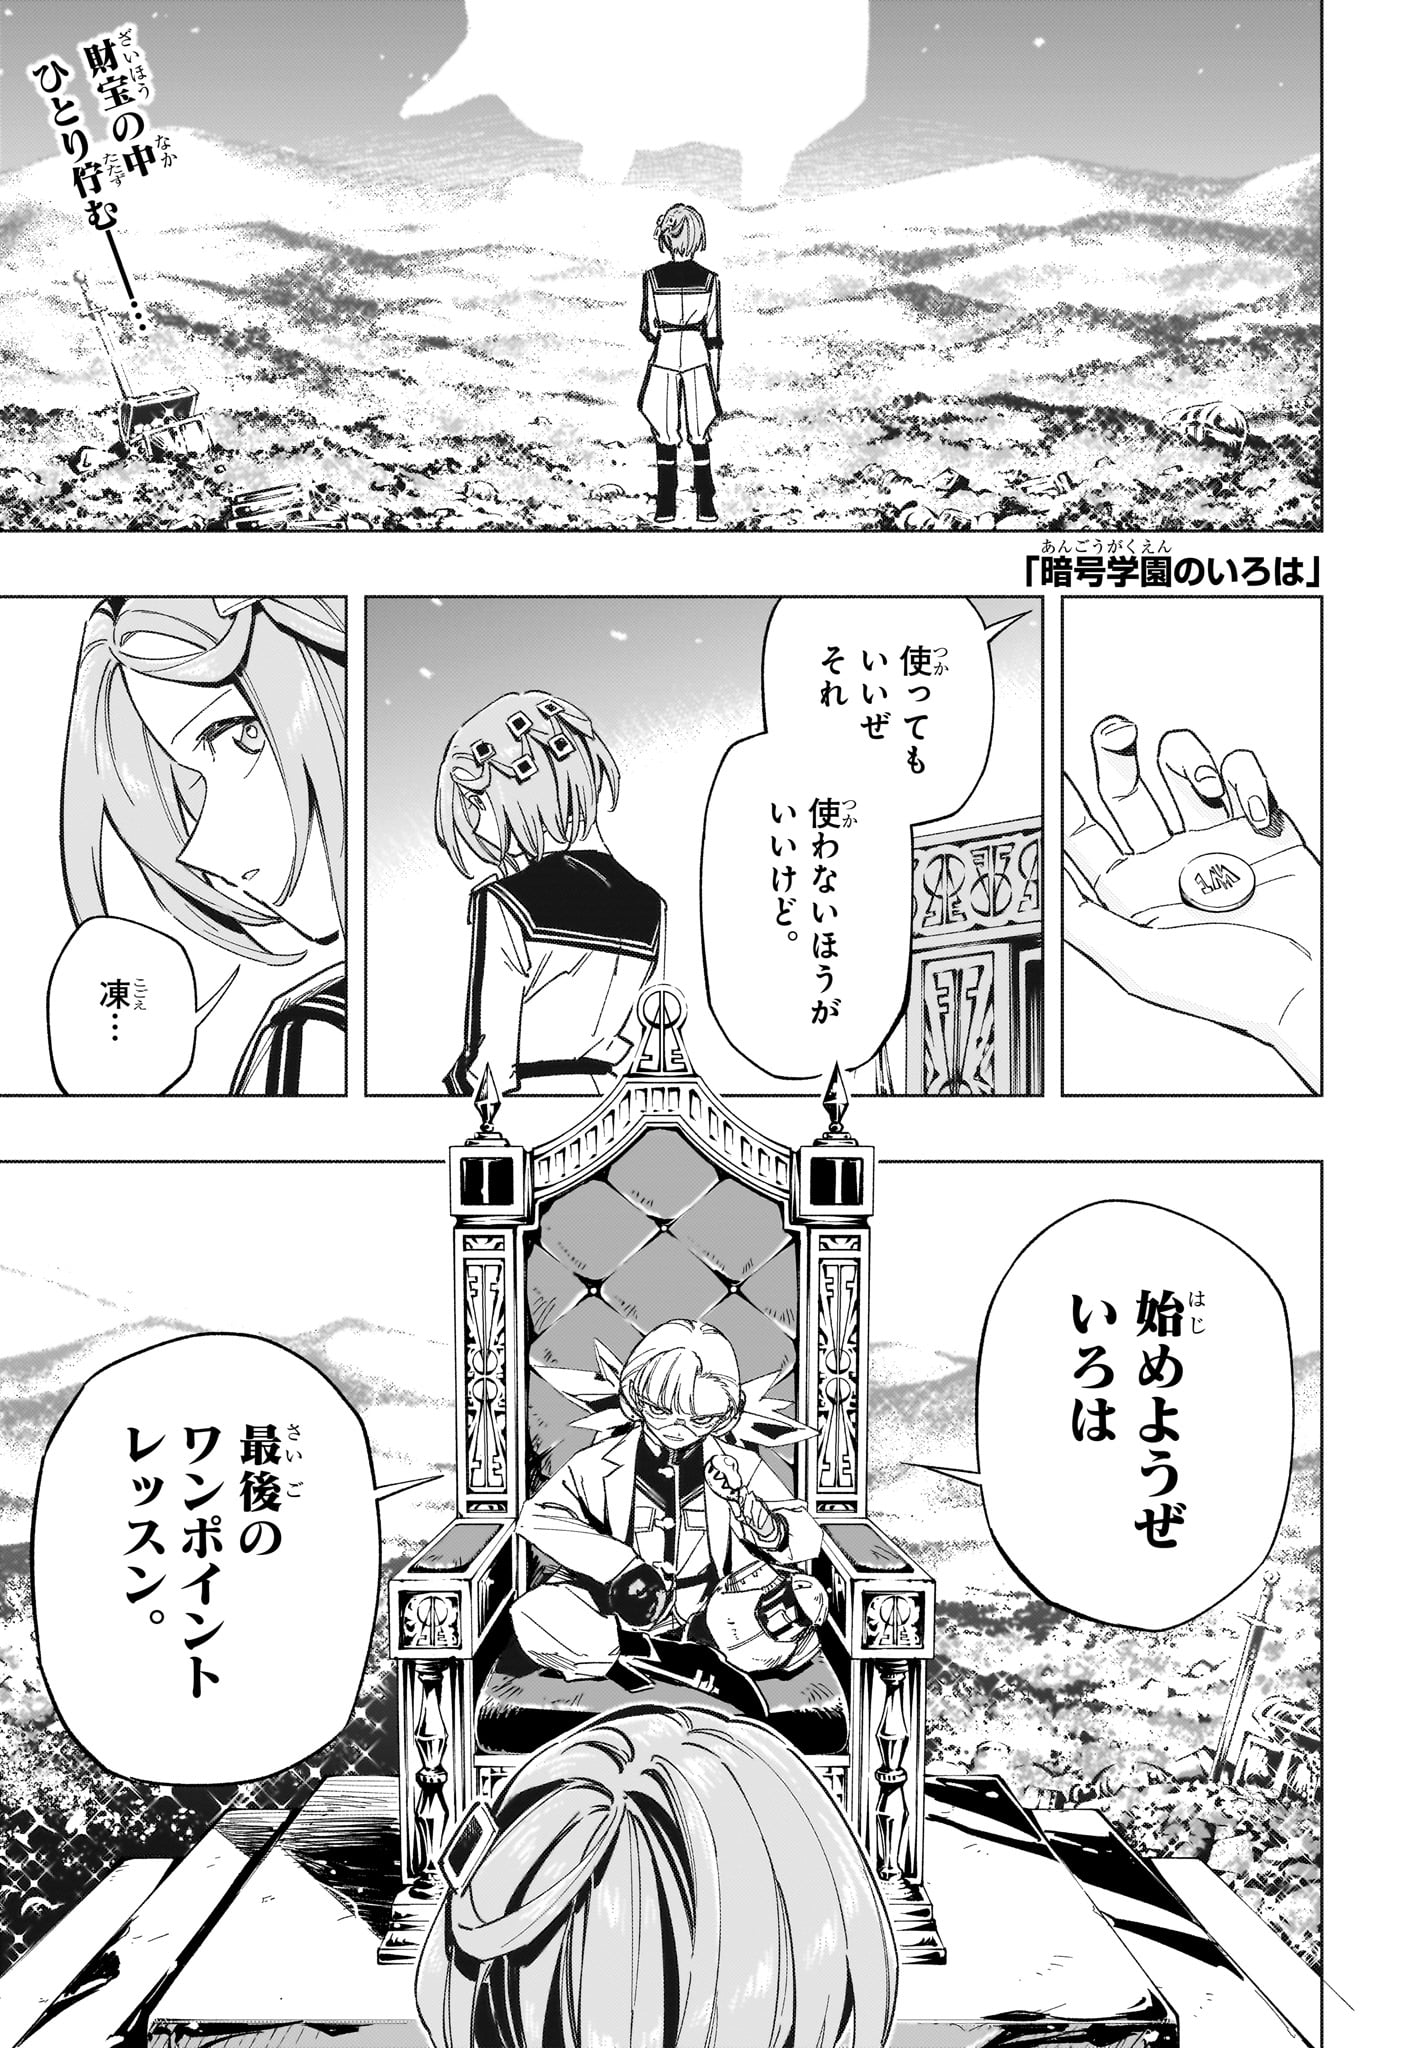 Angou Gakuen no Iroha - Chapter 57 - Page 1